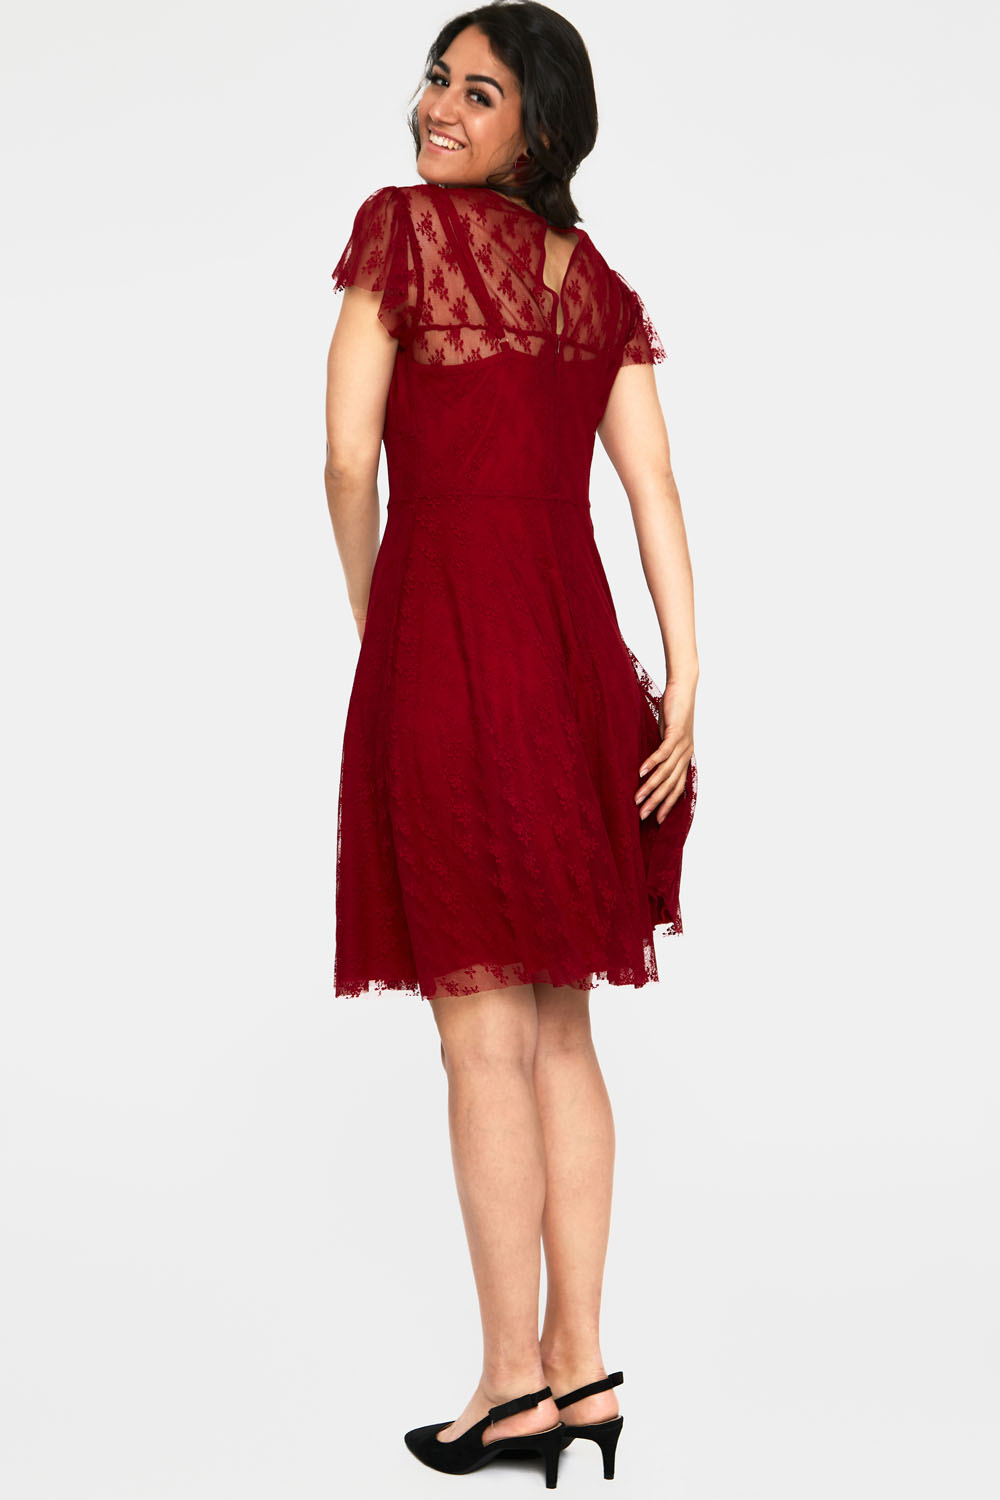 Burgandy Lace Flare Dress